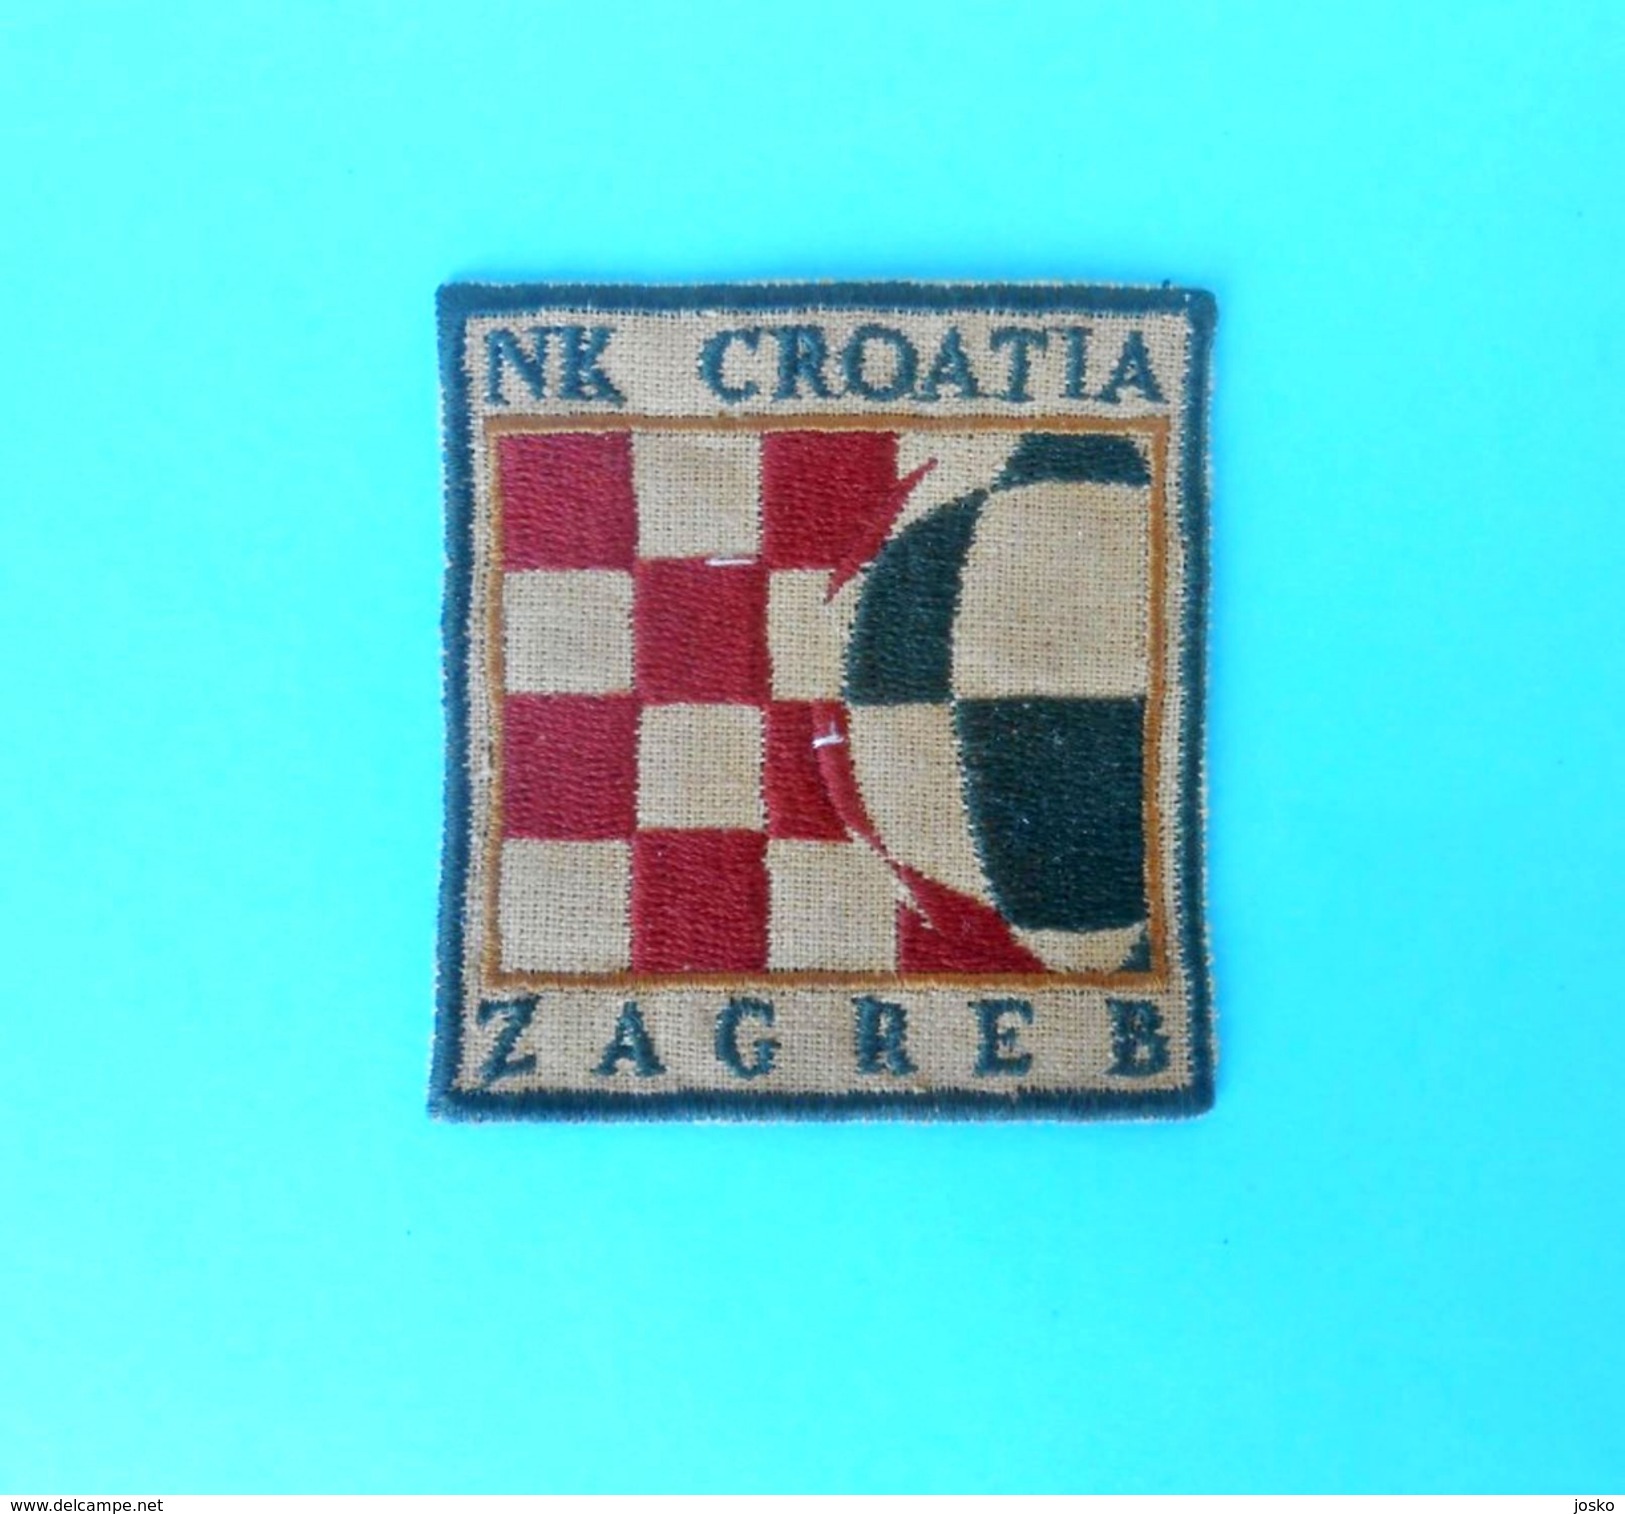 NK CROATIA ZAGREB ( Now GNK DINAMO ) - Croatia Football Club Official Vintage Patch * Soccer Fussball Calcio Croatie - Apparel, Souvenirs & Other